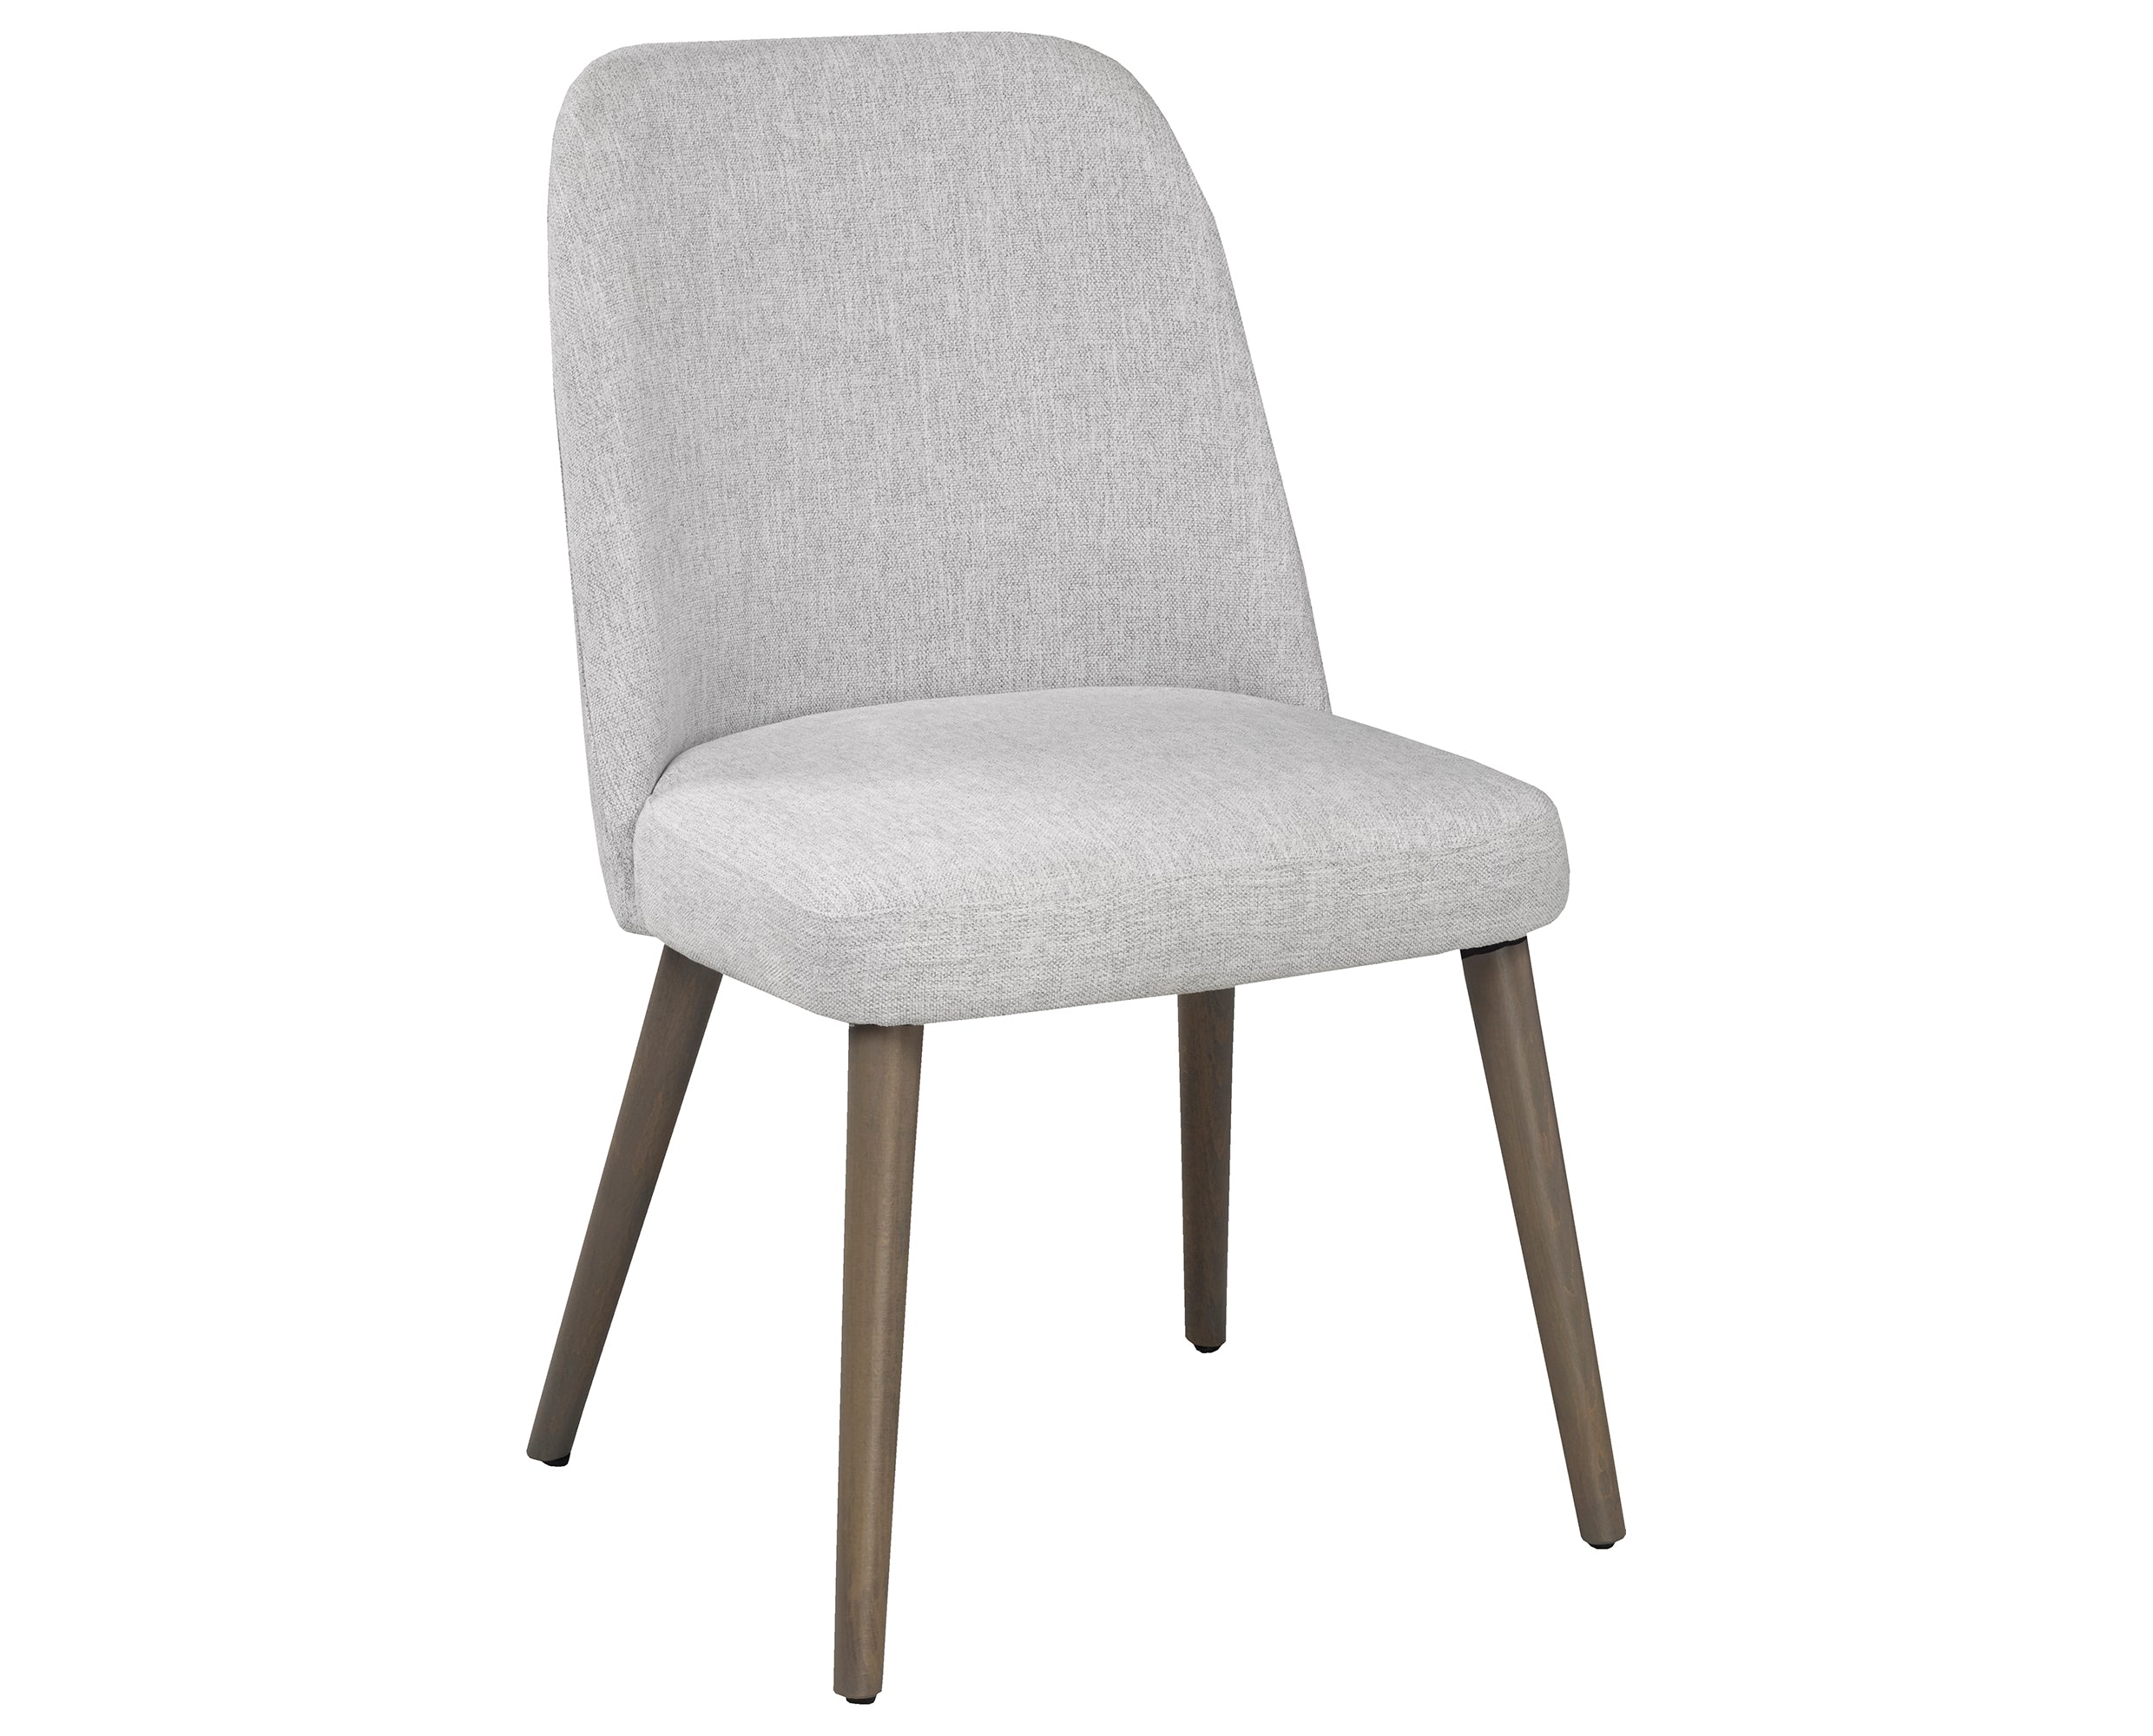 Chair as Shown | Cardinal Woodcraft Eskola Chair | Valley Ridge Furniture